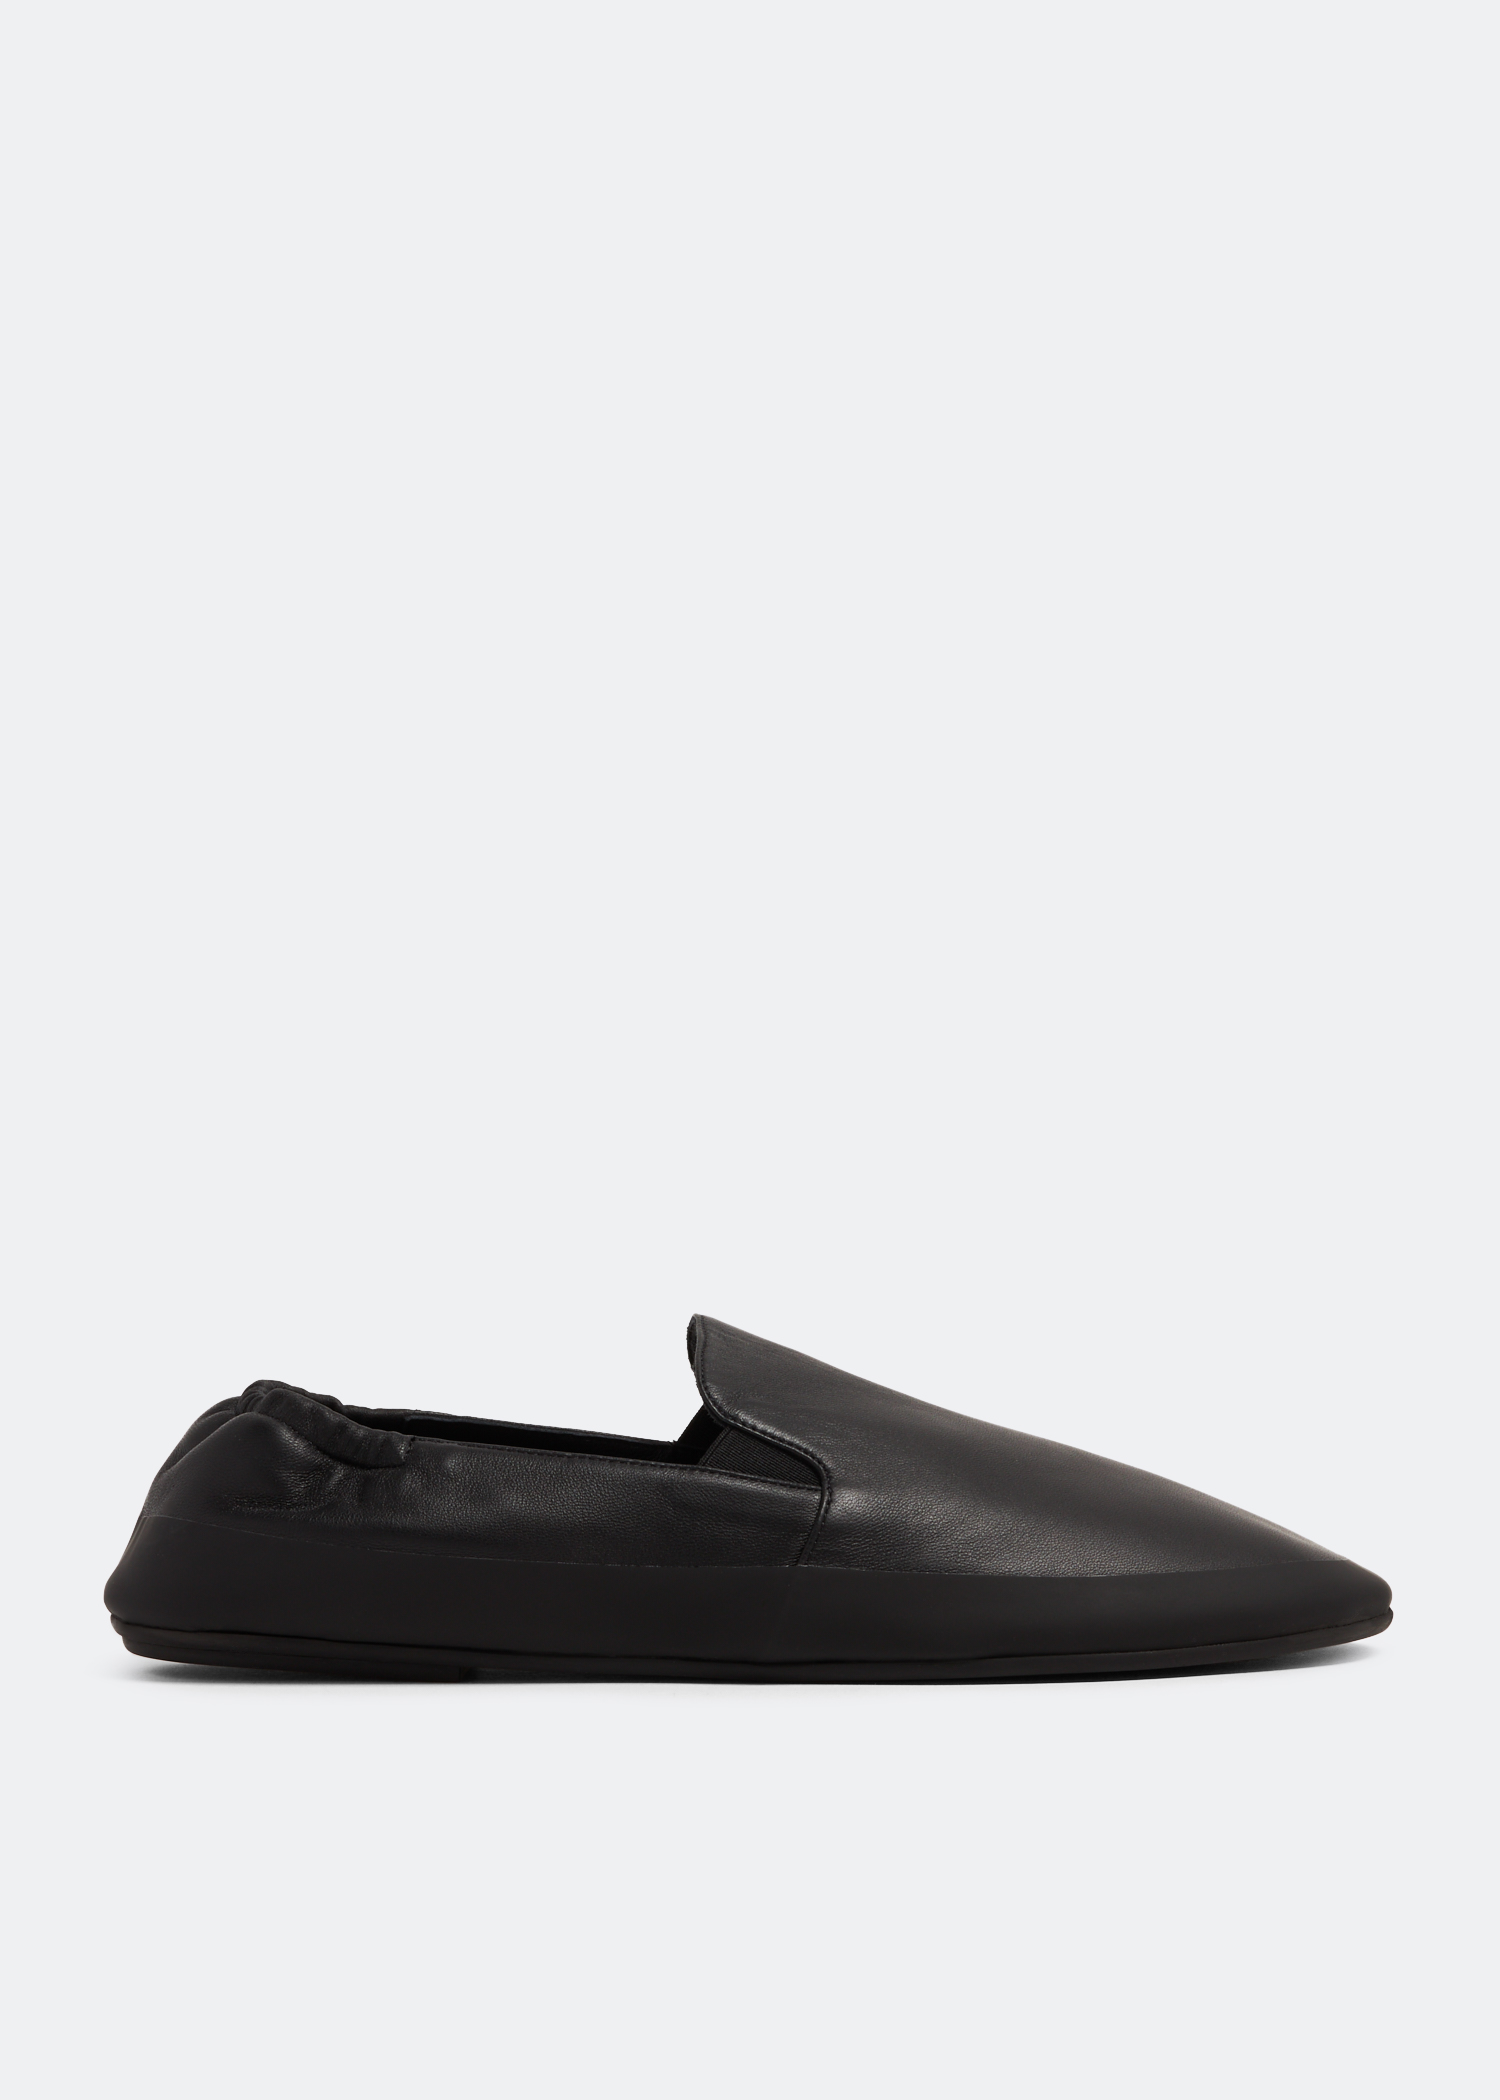 Teramo Shoe - Black - Soft Tumble Leather Loafer Shoes, Shoes